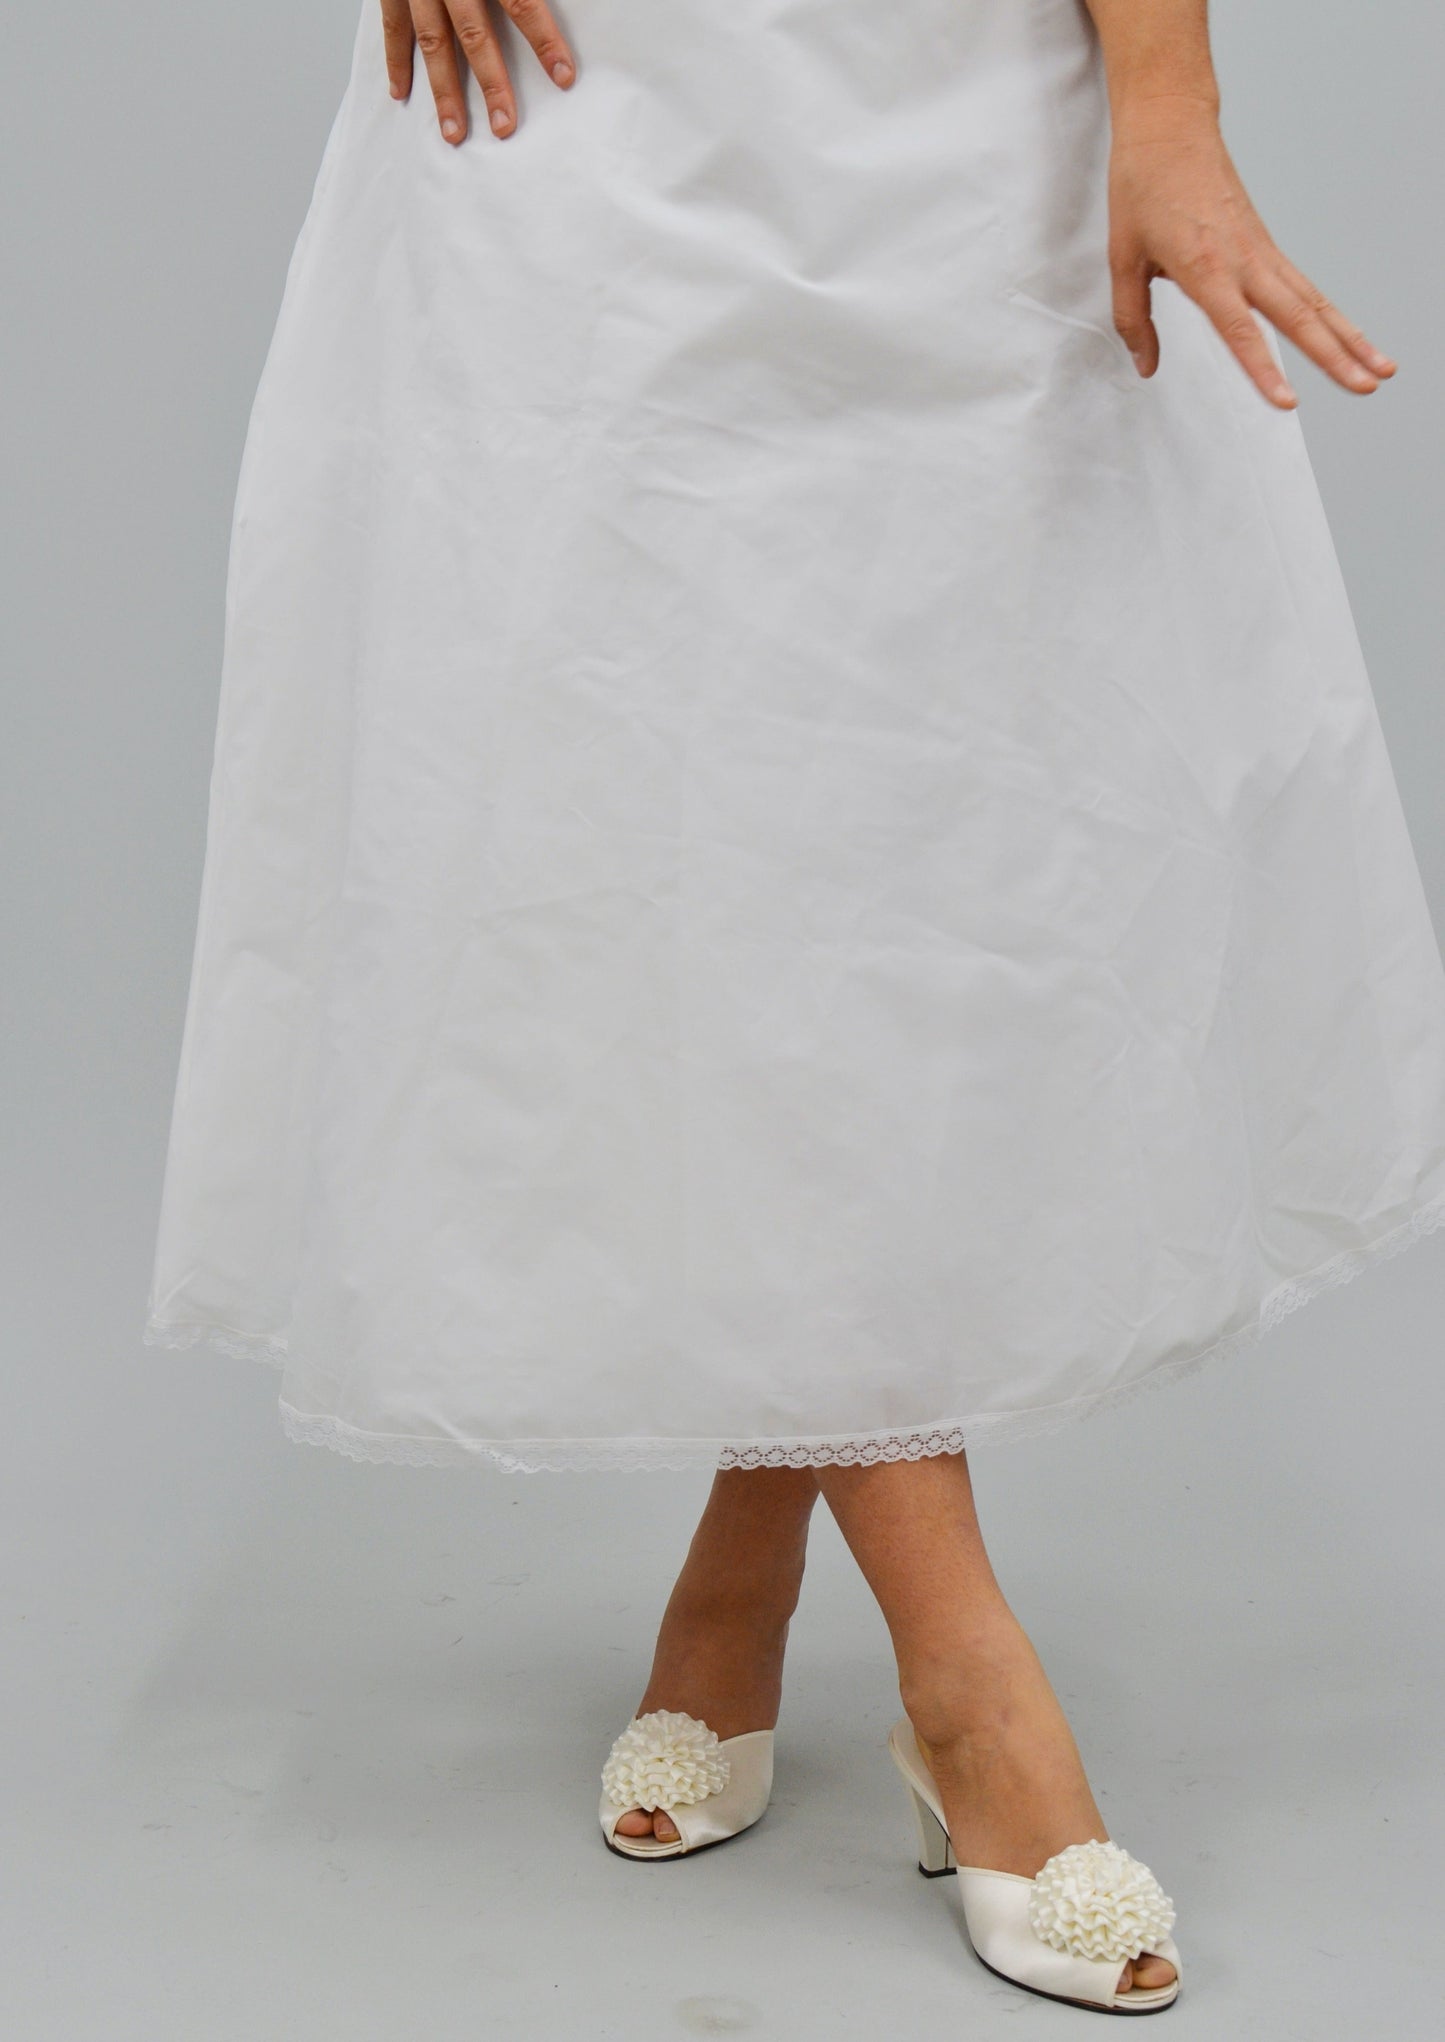 The Moxie A-Line Petticoat Skirt